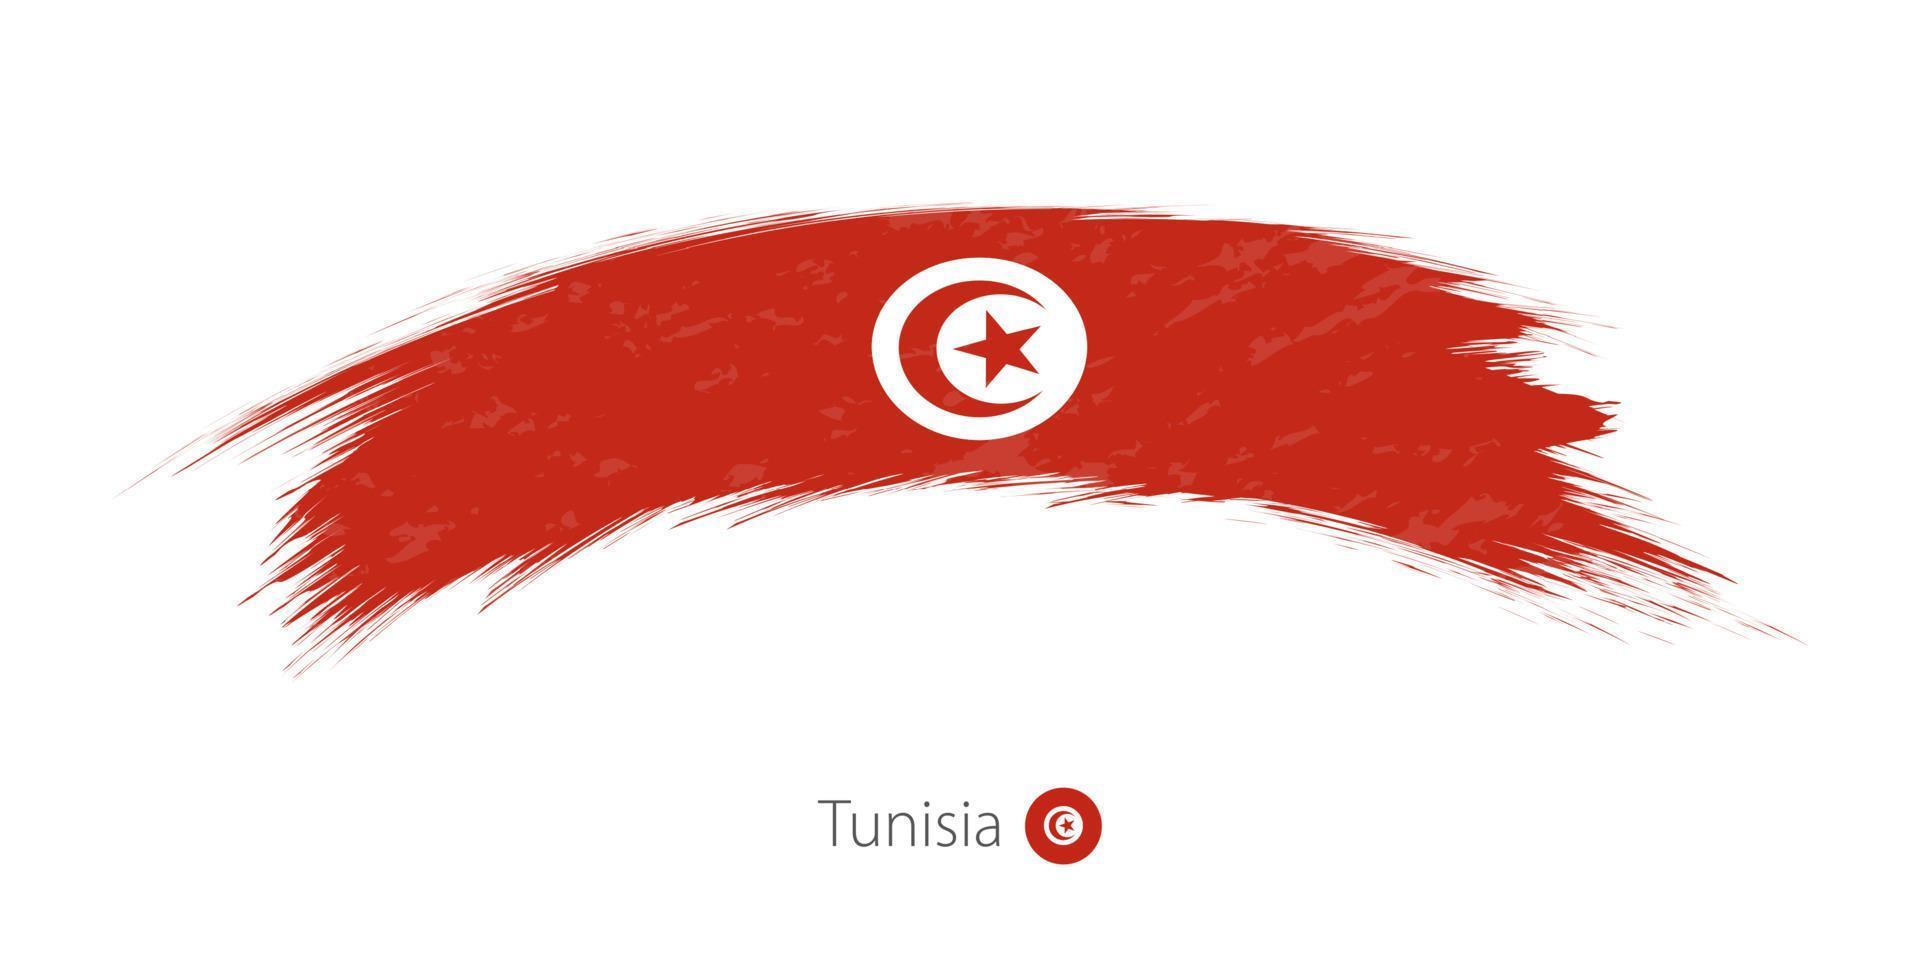 bandeira da tunísia na pincelada grunge arredondado. vetor